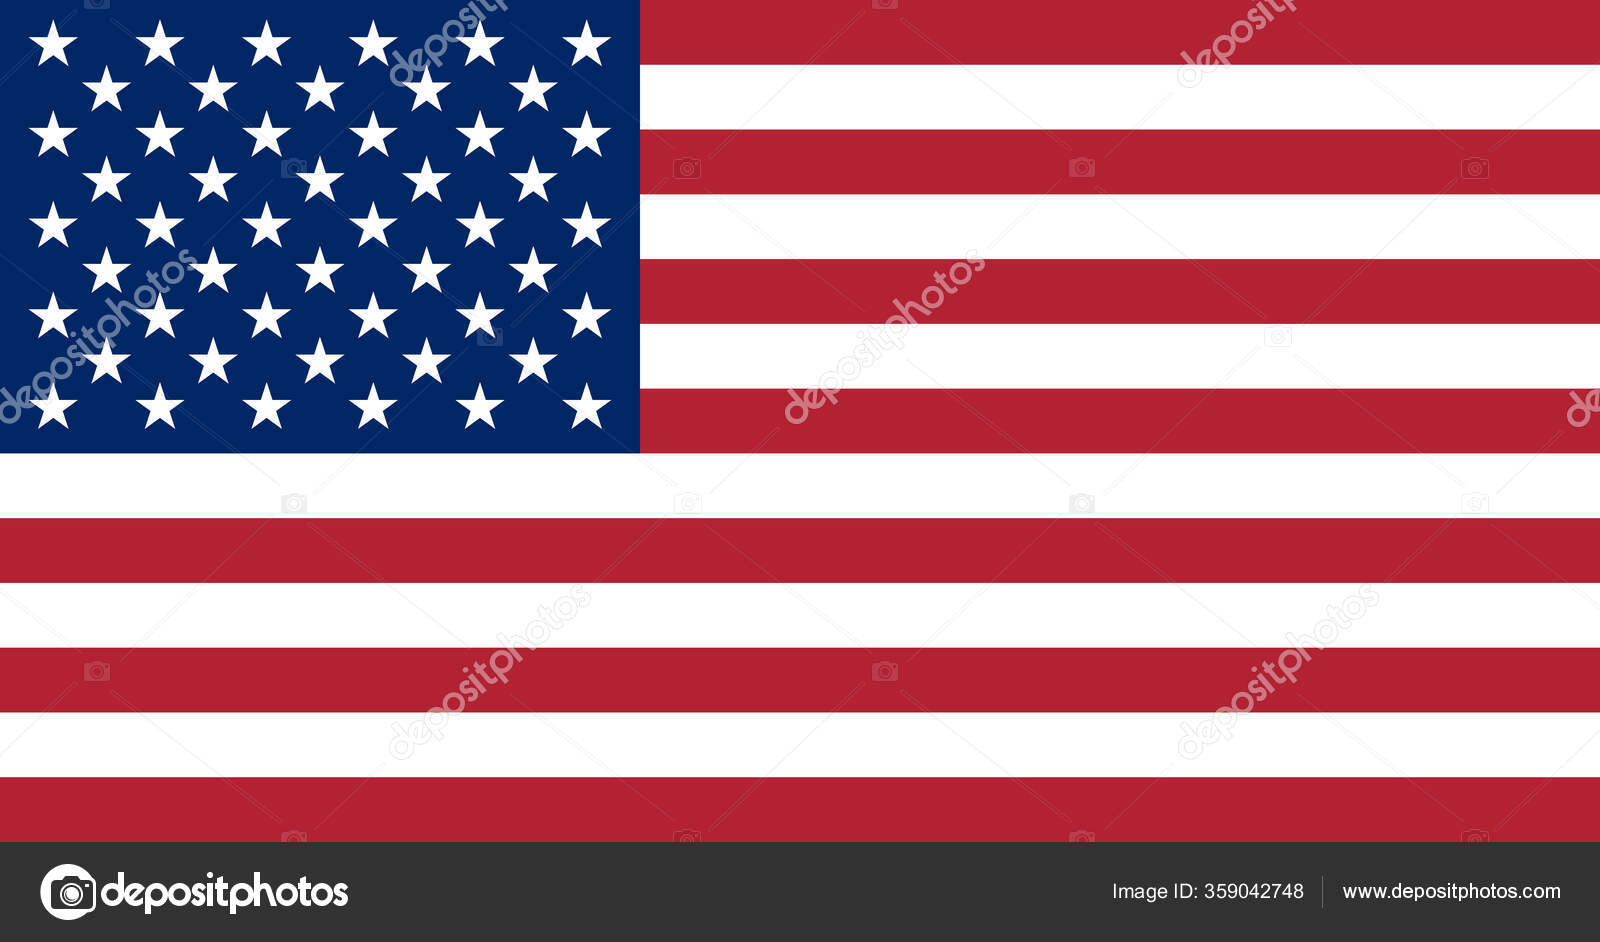 https://st3.depositphotos.com/1009440/35904/v/1600/depositphotos_359042748-stock-illustration-official-flag-usa-flag-correct.jpg